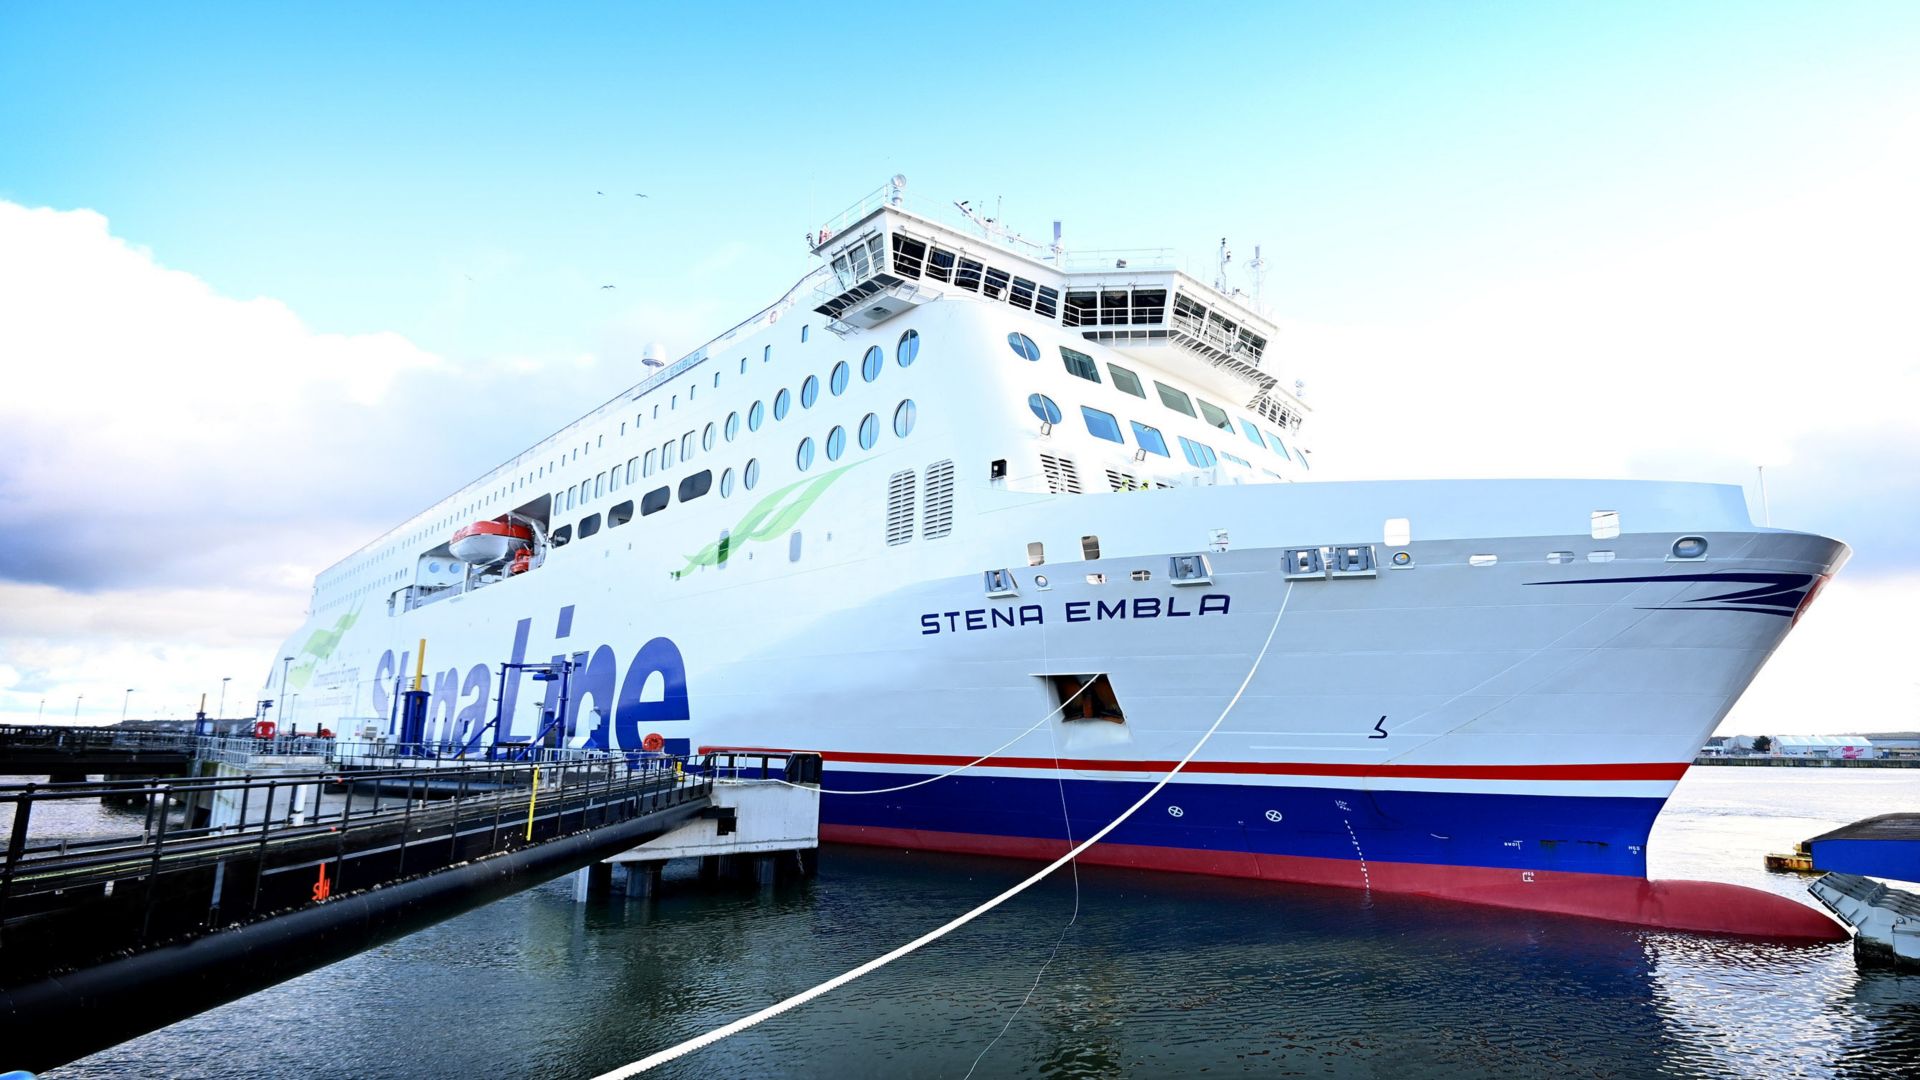 Stena Embla ferry docked at Liverpool Port